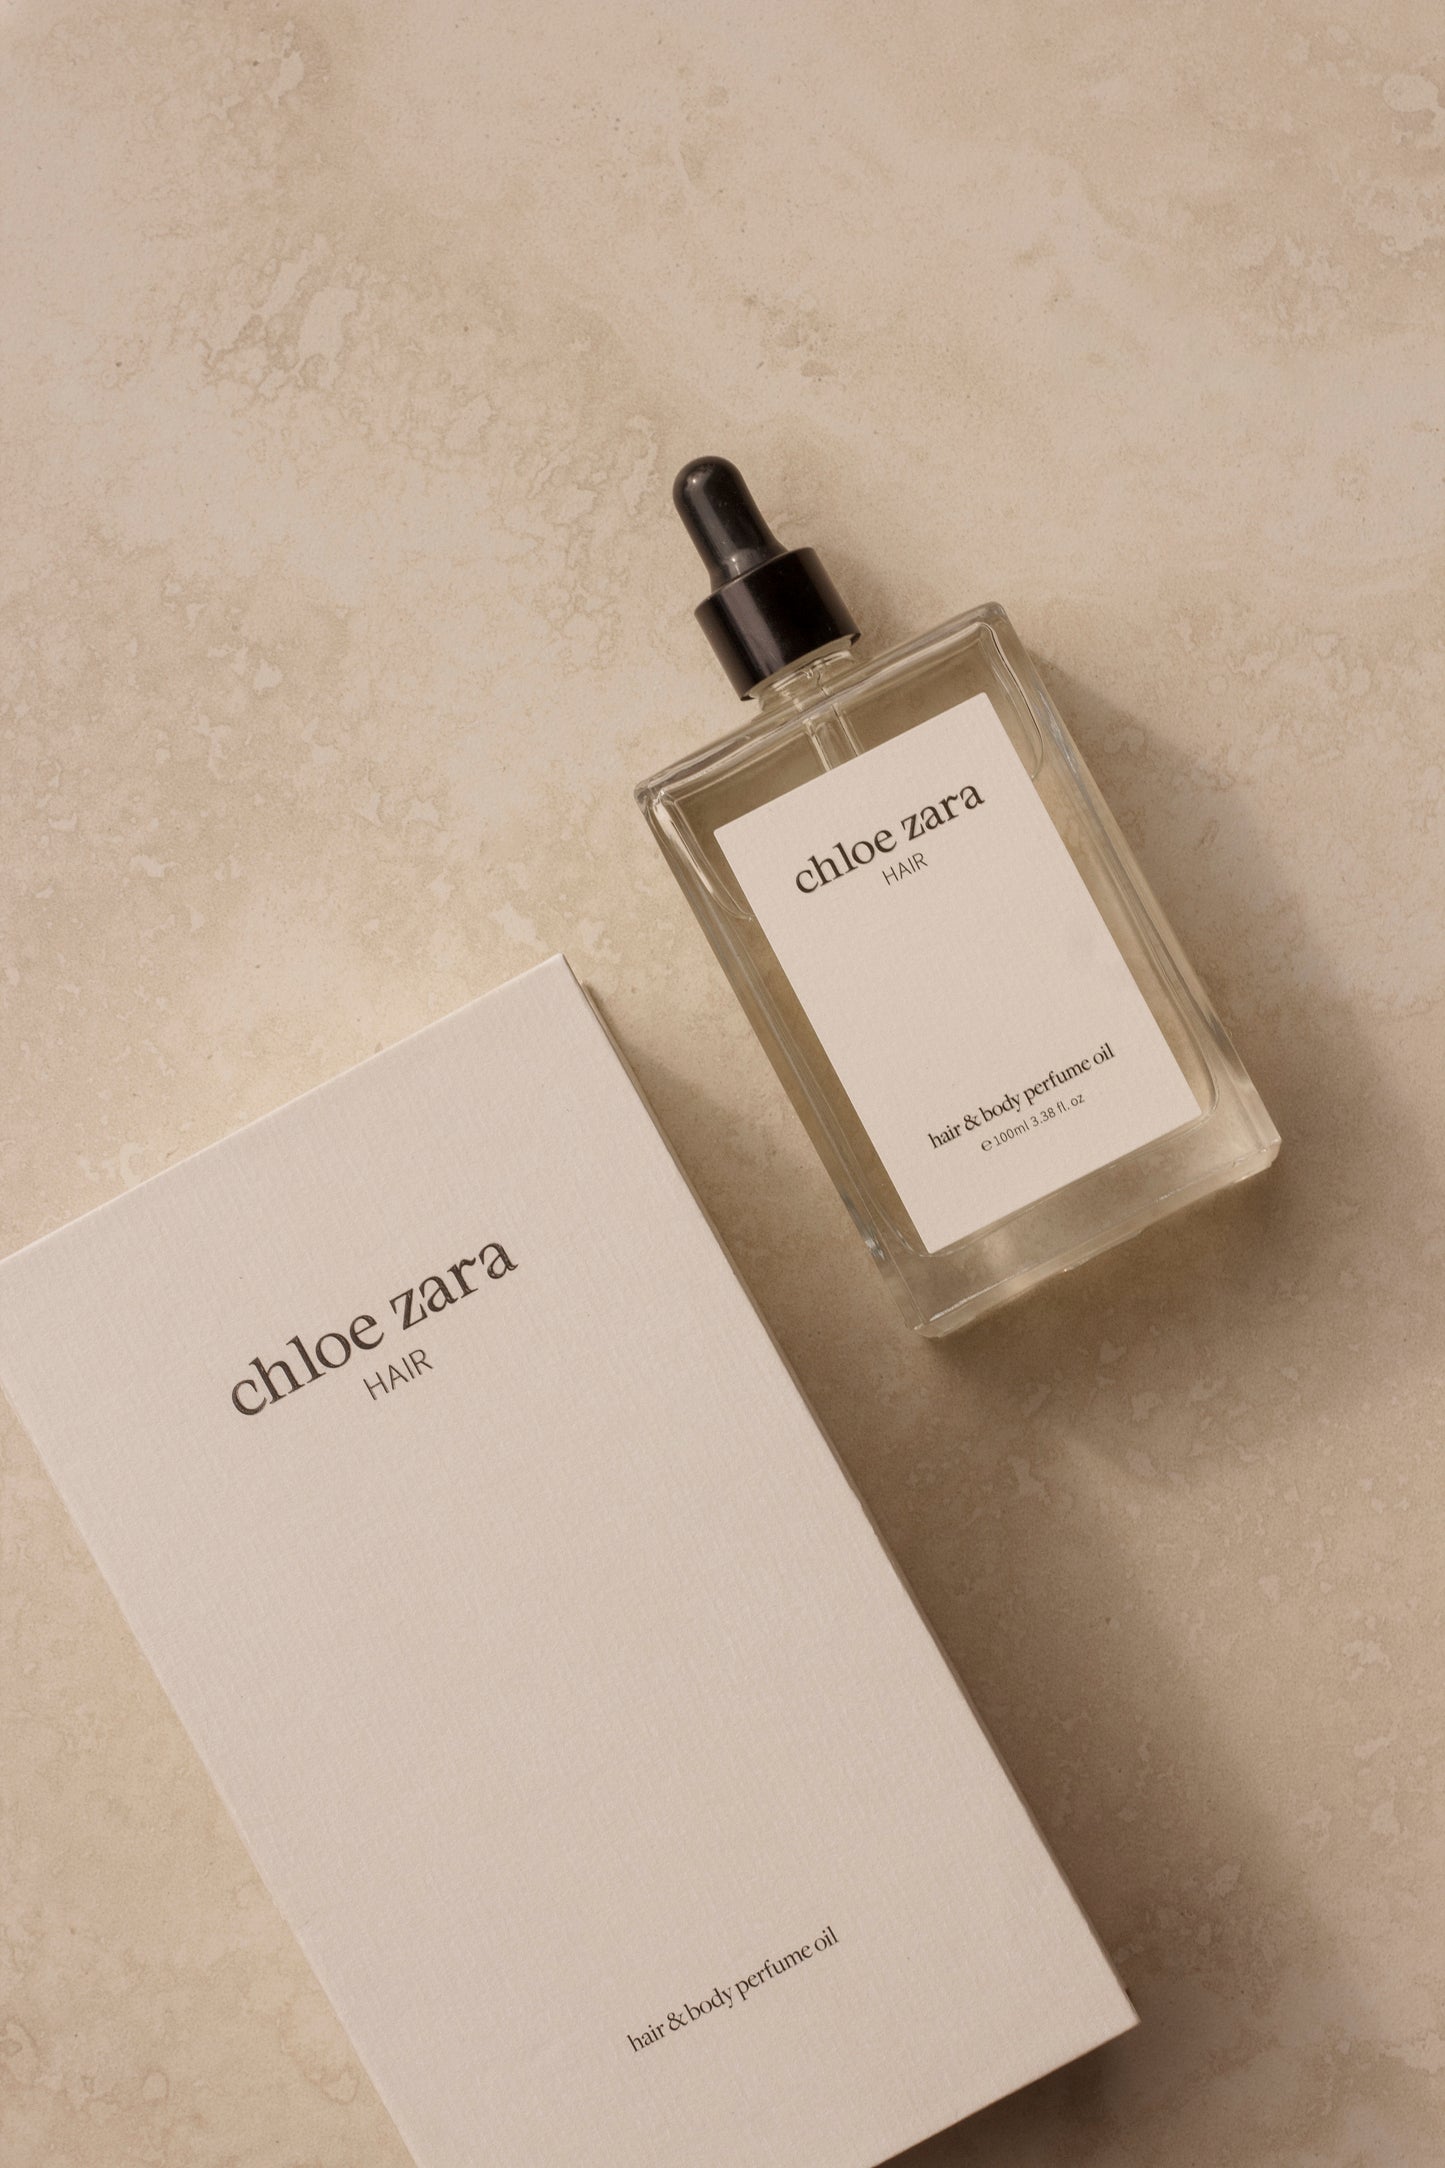 hair & body perfume oil | chloe zara hair